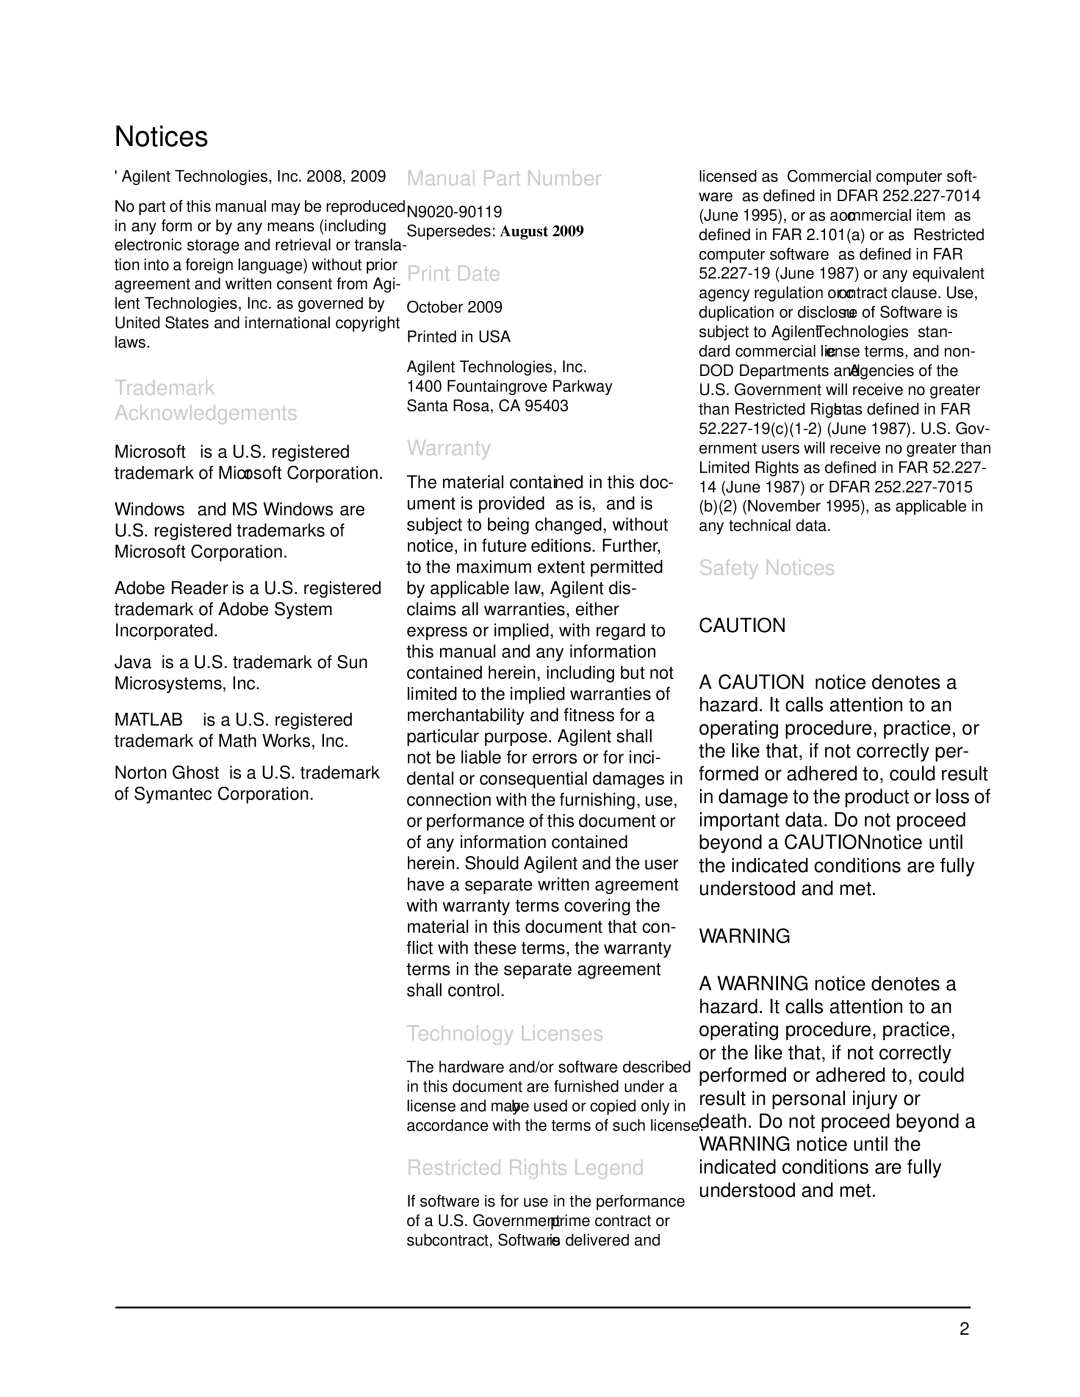 Agilent Technologies N9030a manual Manual Part Number 